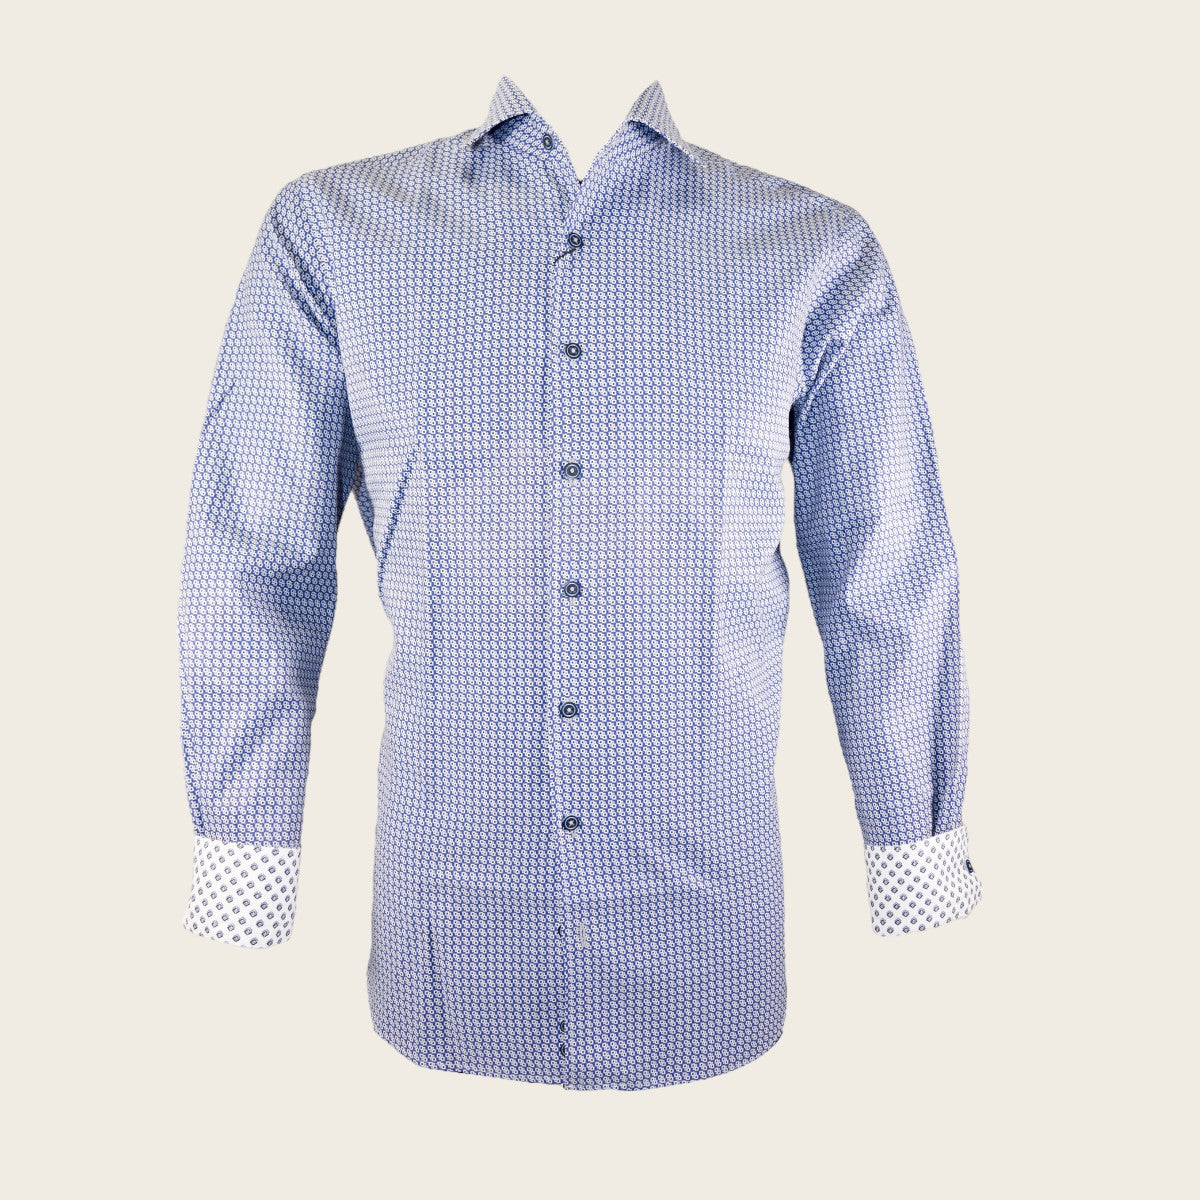 Blue print men shirt, organic patterns